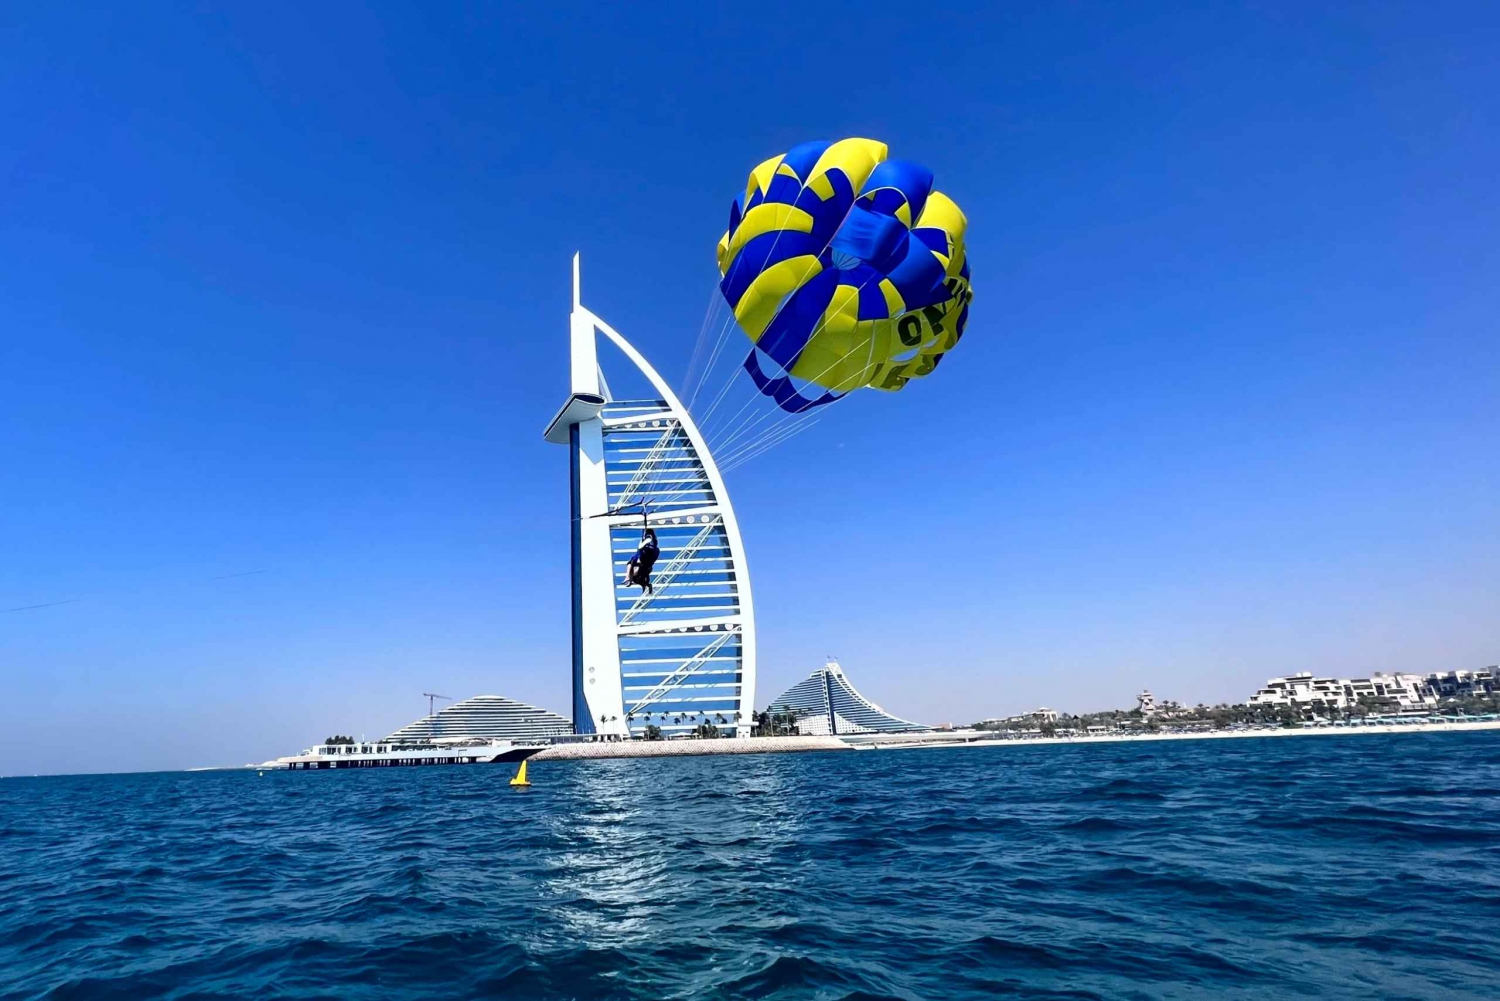 Dubai: Parasailing ervaring met uitzicht op Burj Al Arab